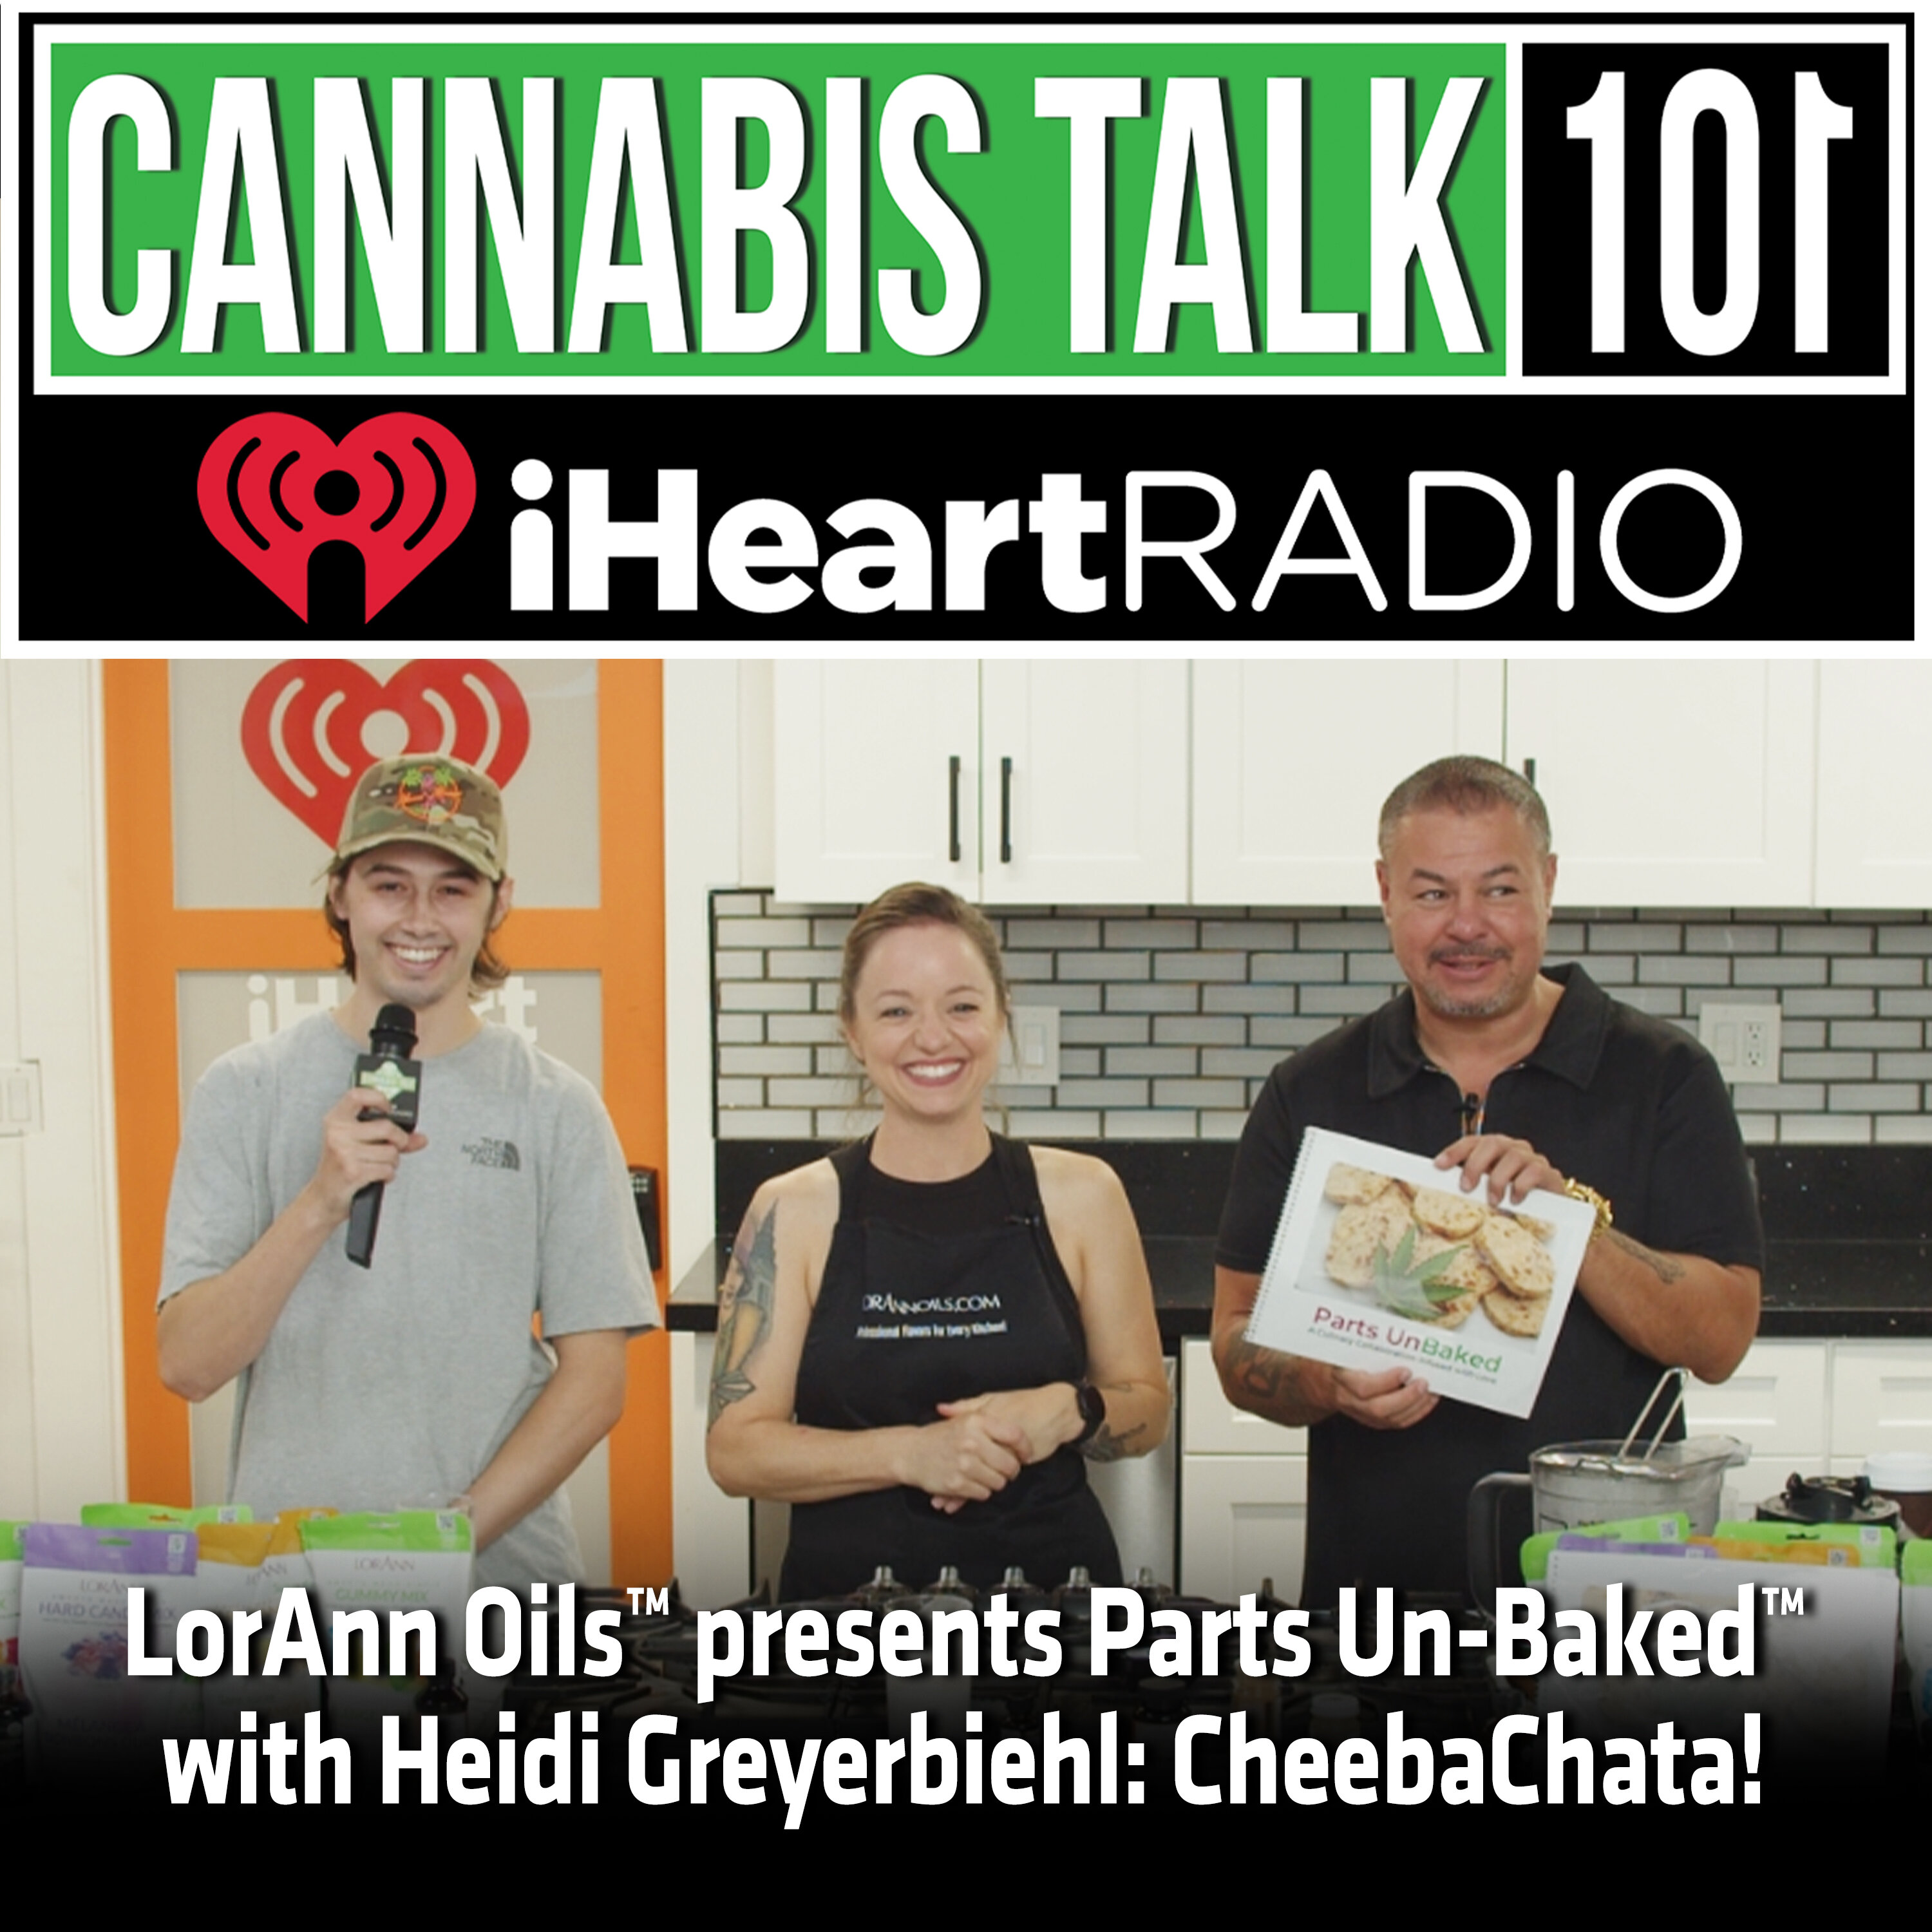 LorAnn Oils™ presents Parts Un-Baked™ with Heidi Greyerbiehl: CheebaChata!